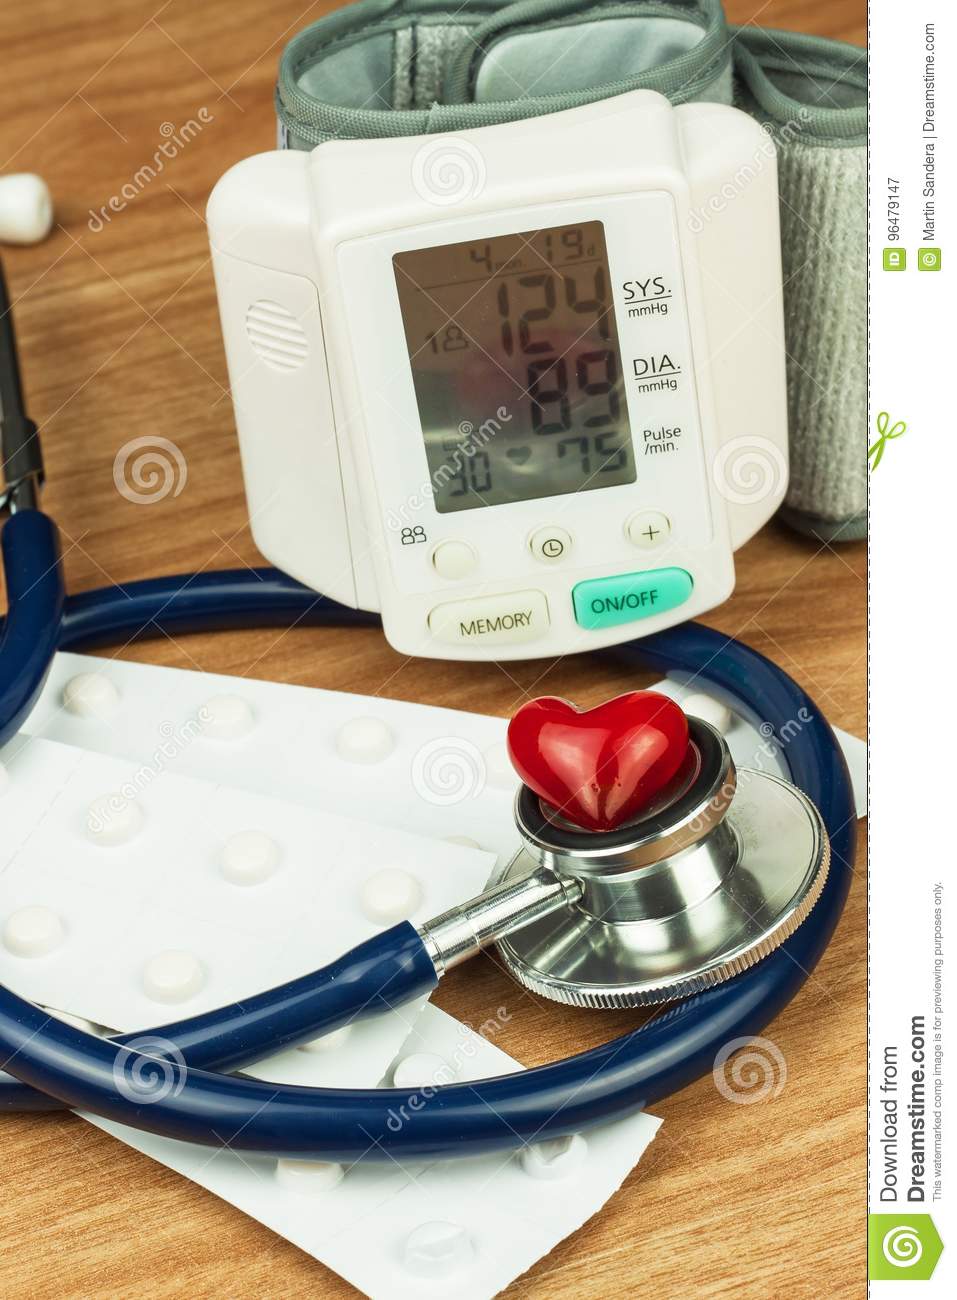 High Blood Pressure Measurement. Treatment Of Civilization ...